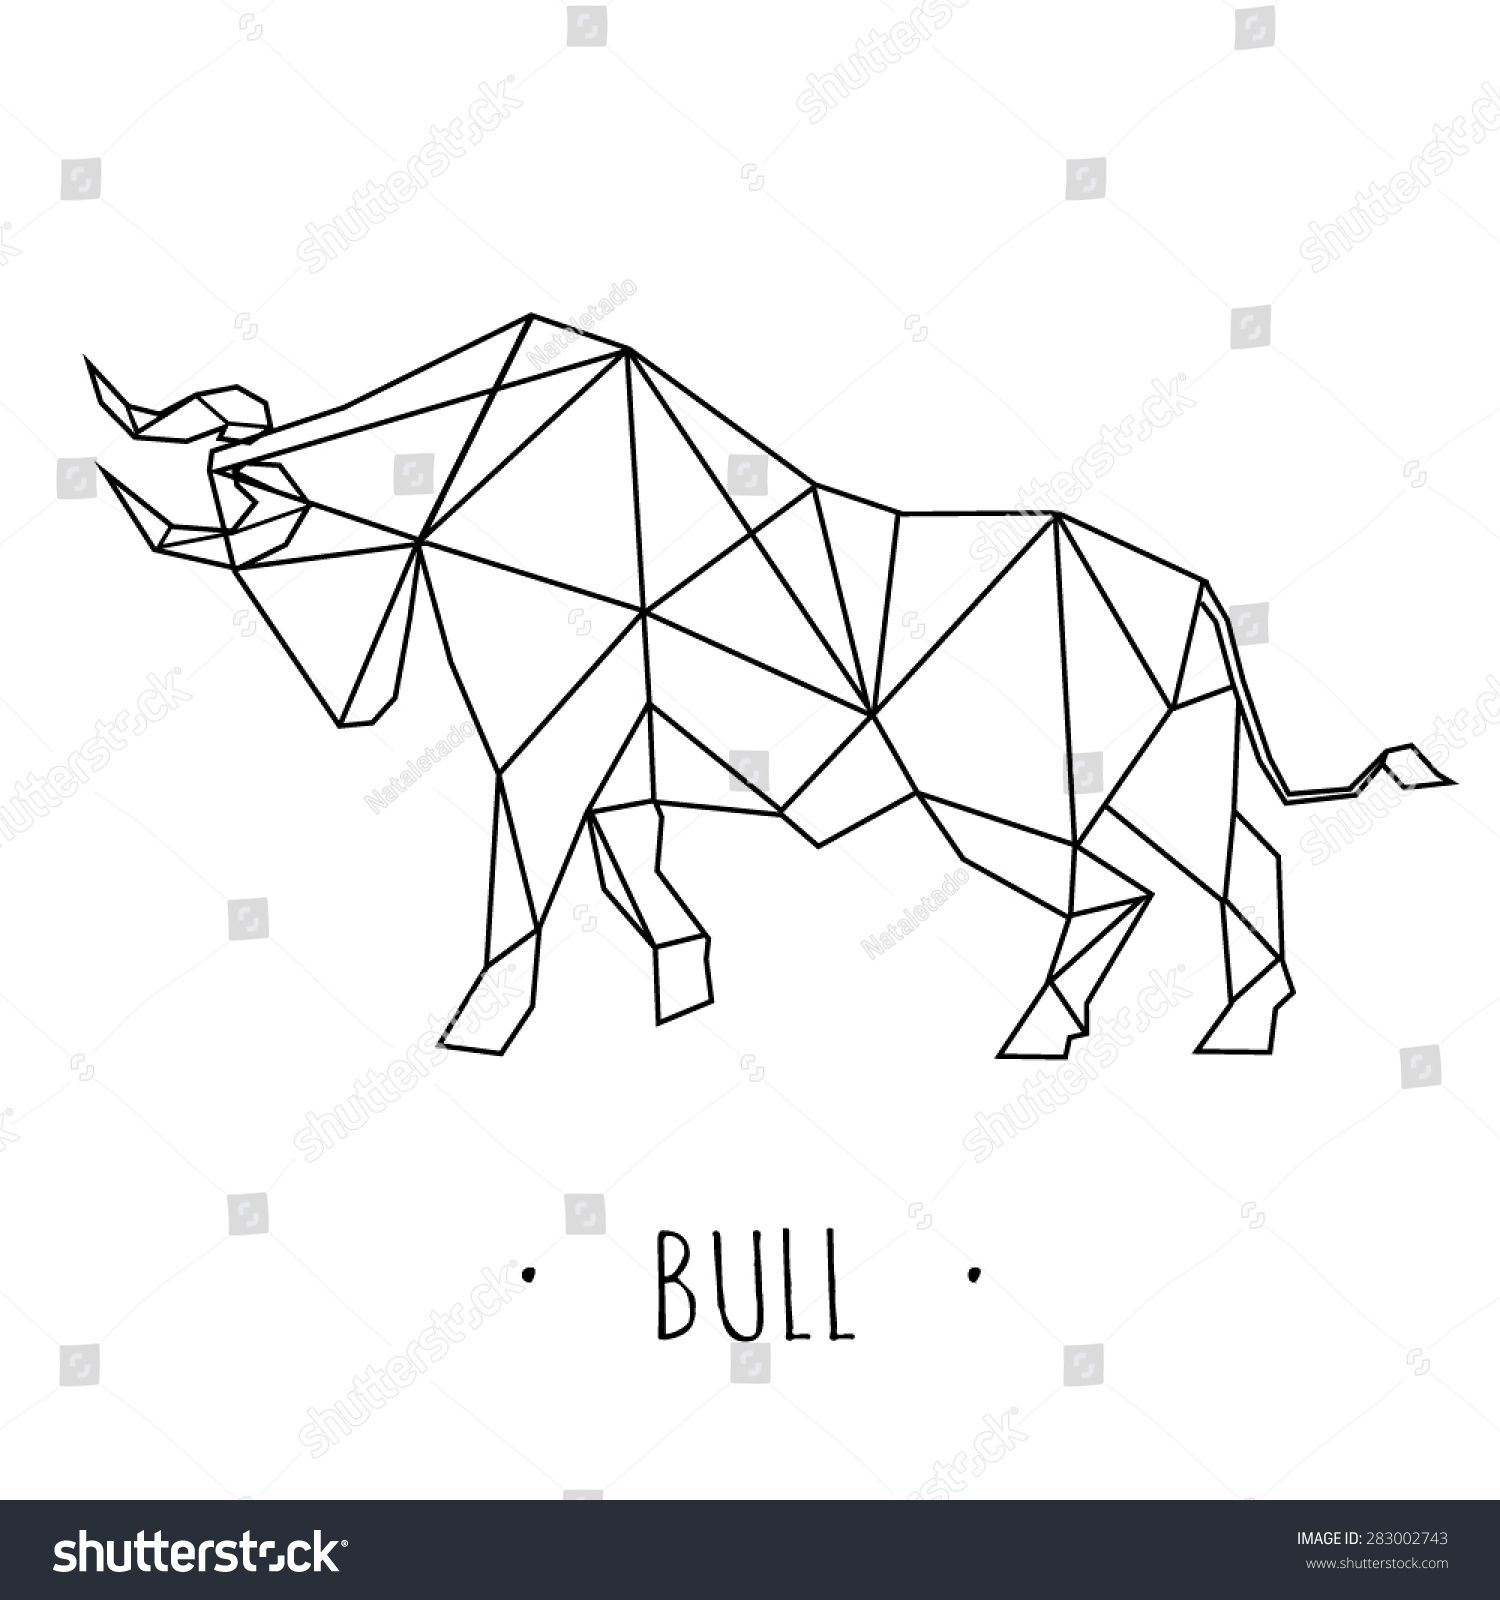 Small Simple Bull Tattoo Designs (8)